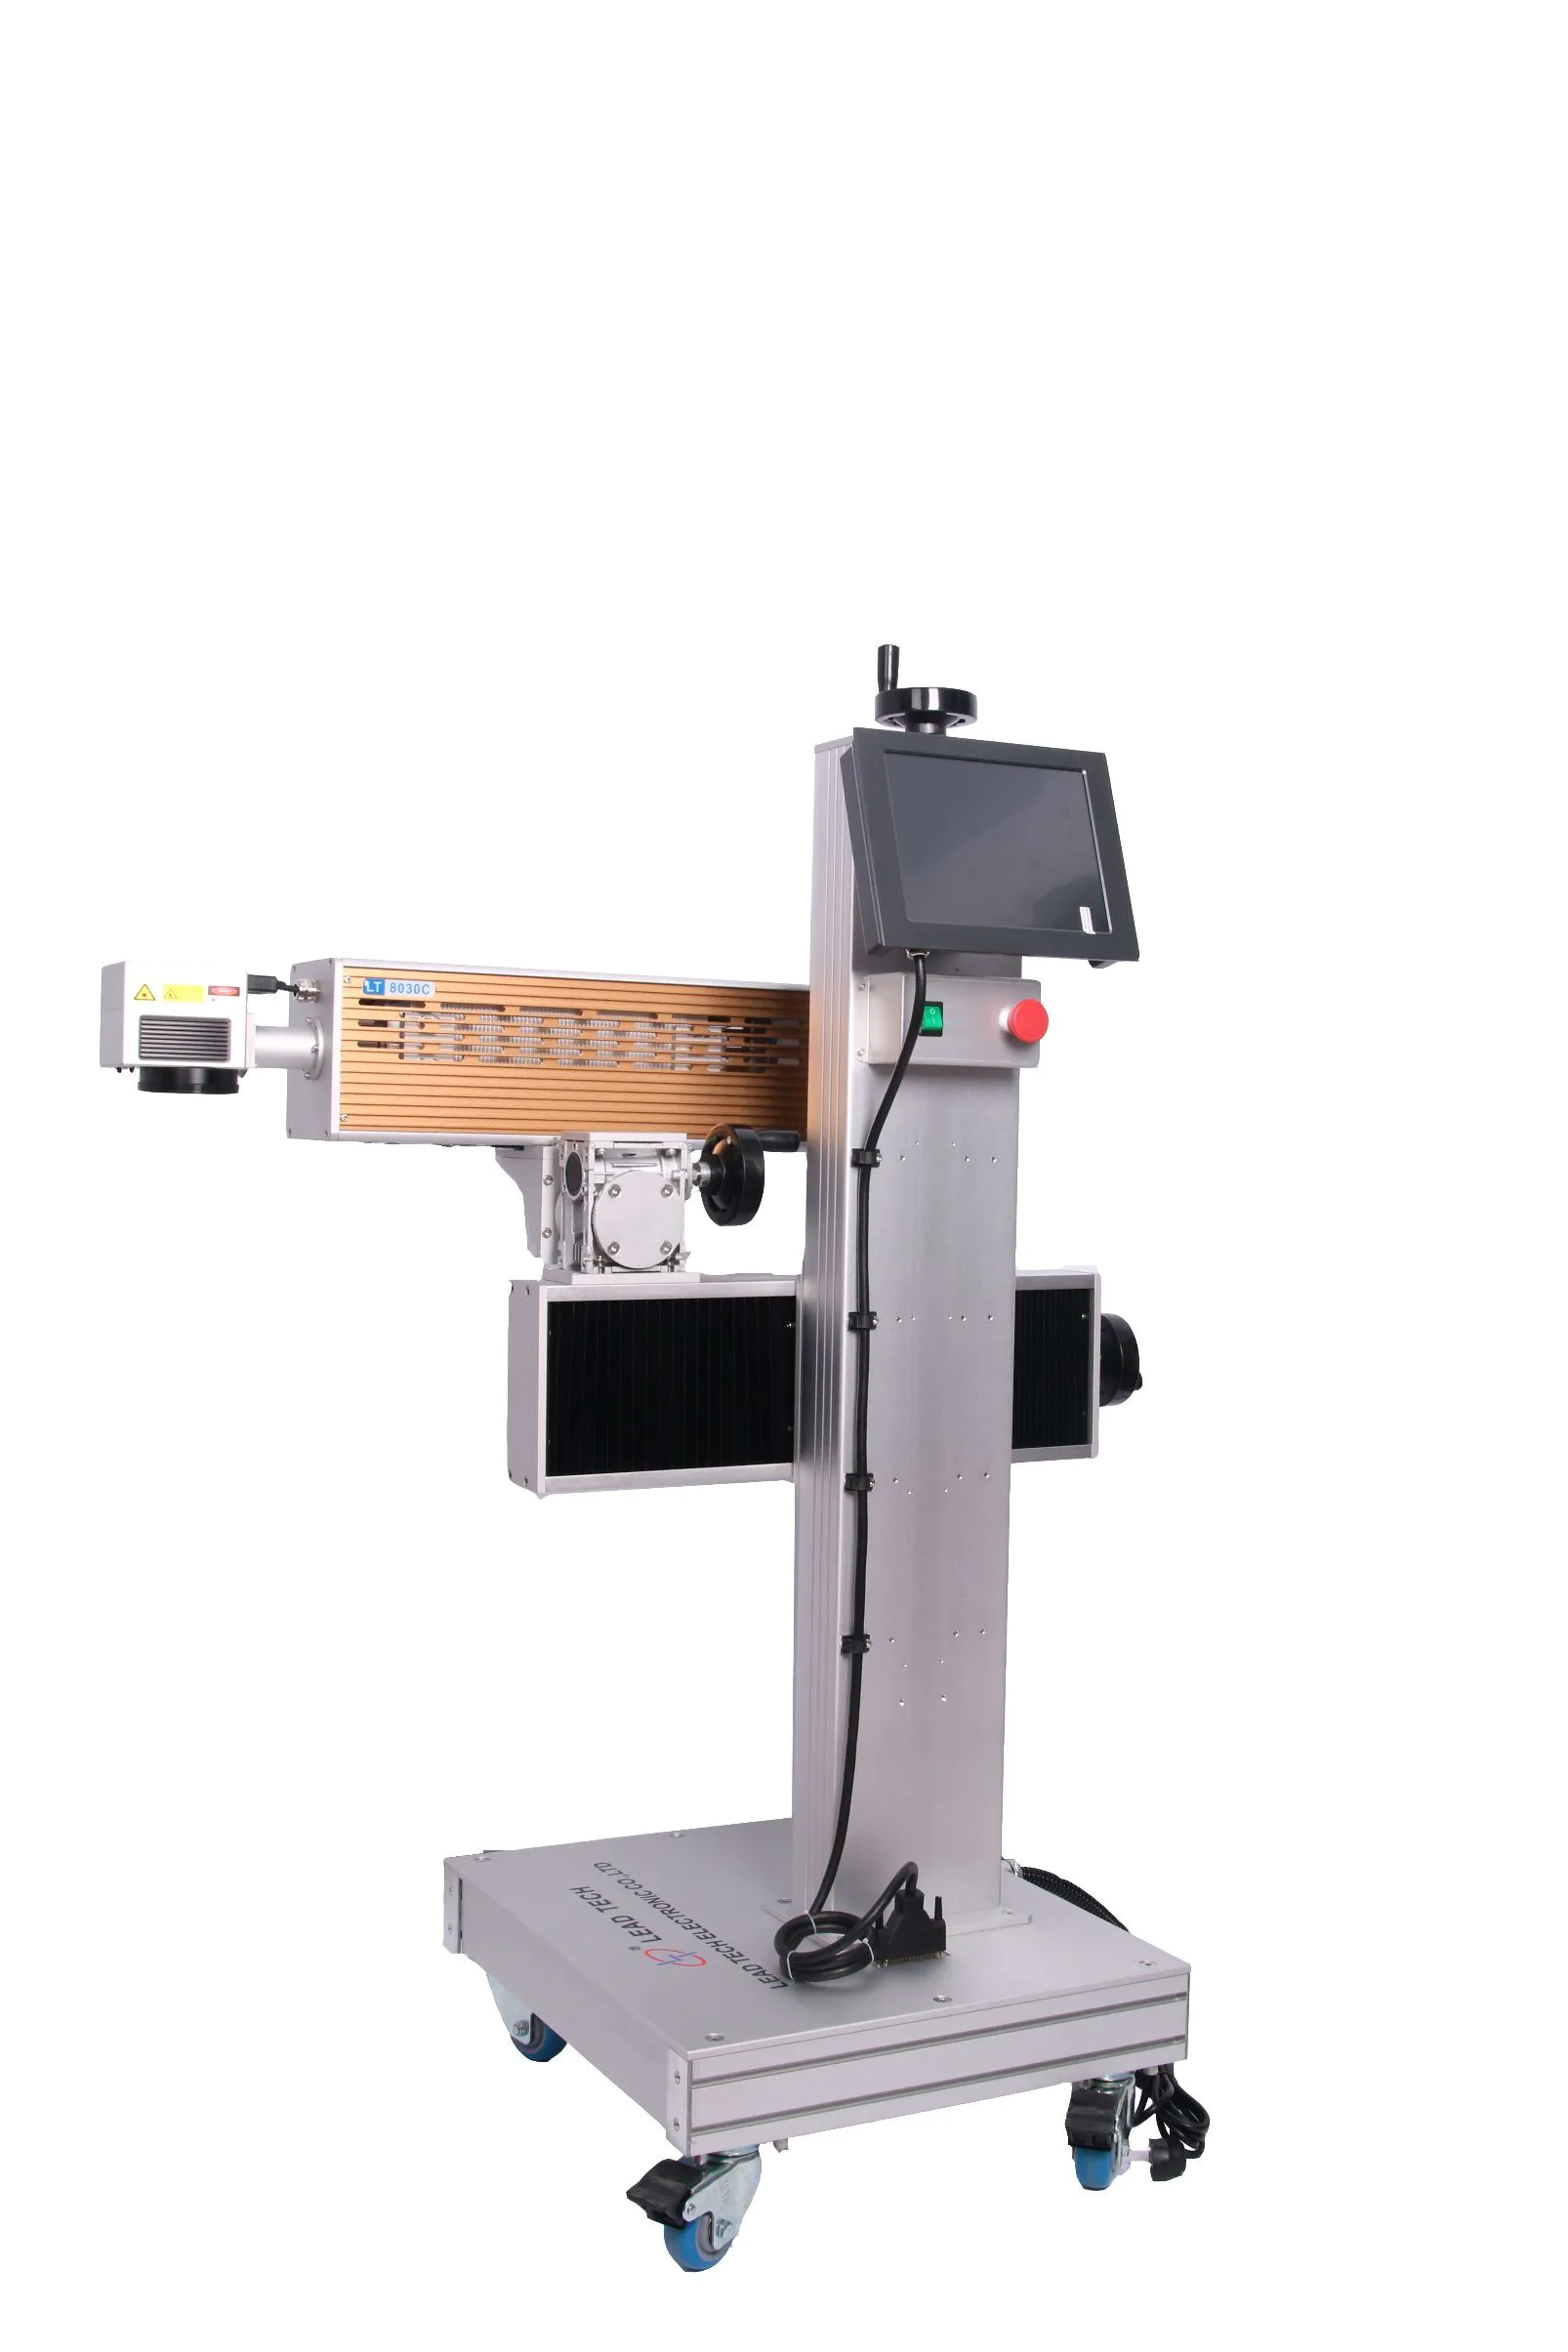 Lt8020c/Lt8030c CO2 High Performance Digital Laser Marking Printer for Stainless Steel Metal